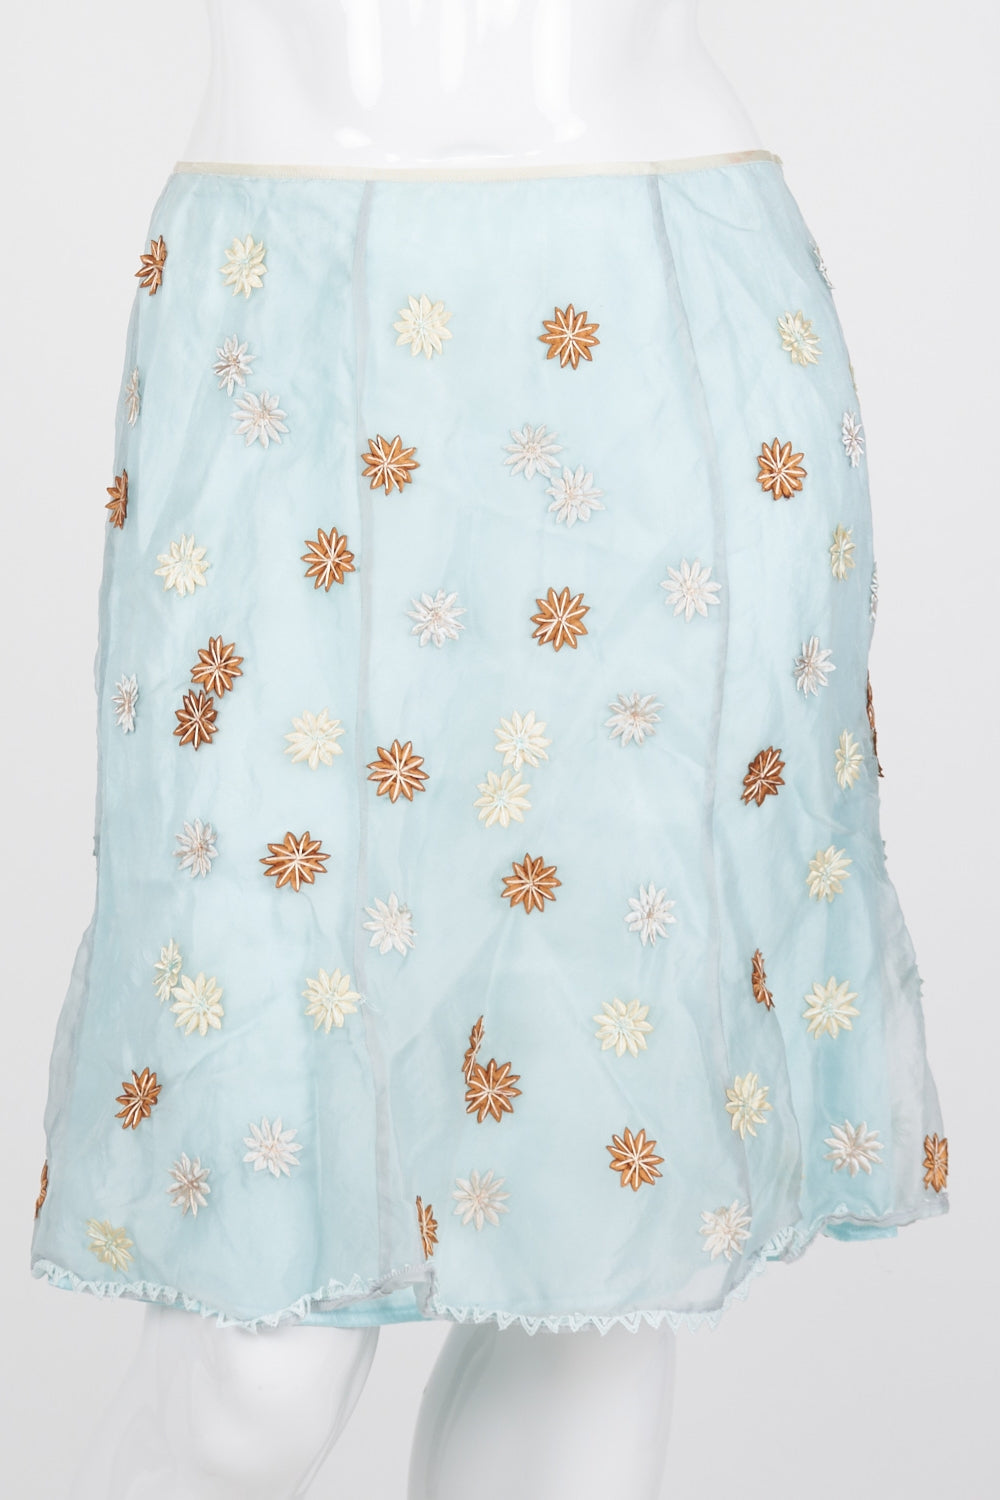 Anthea Crawford Blue Floral Silk Skirt 14